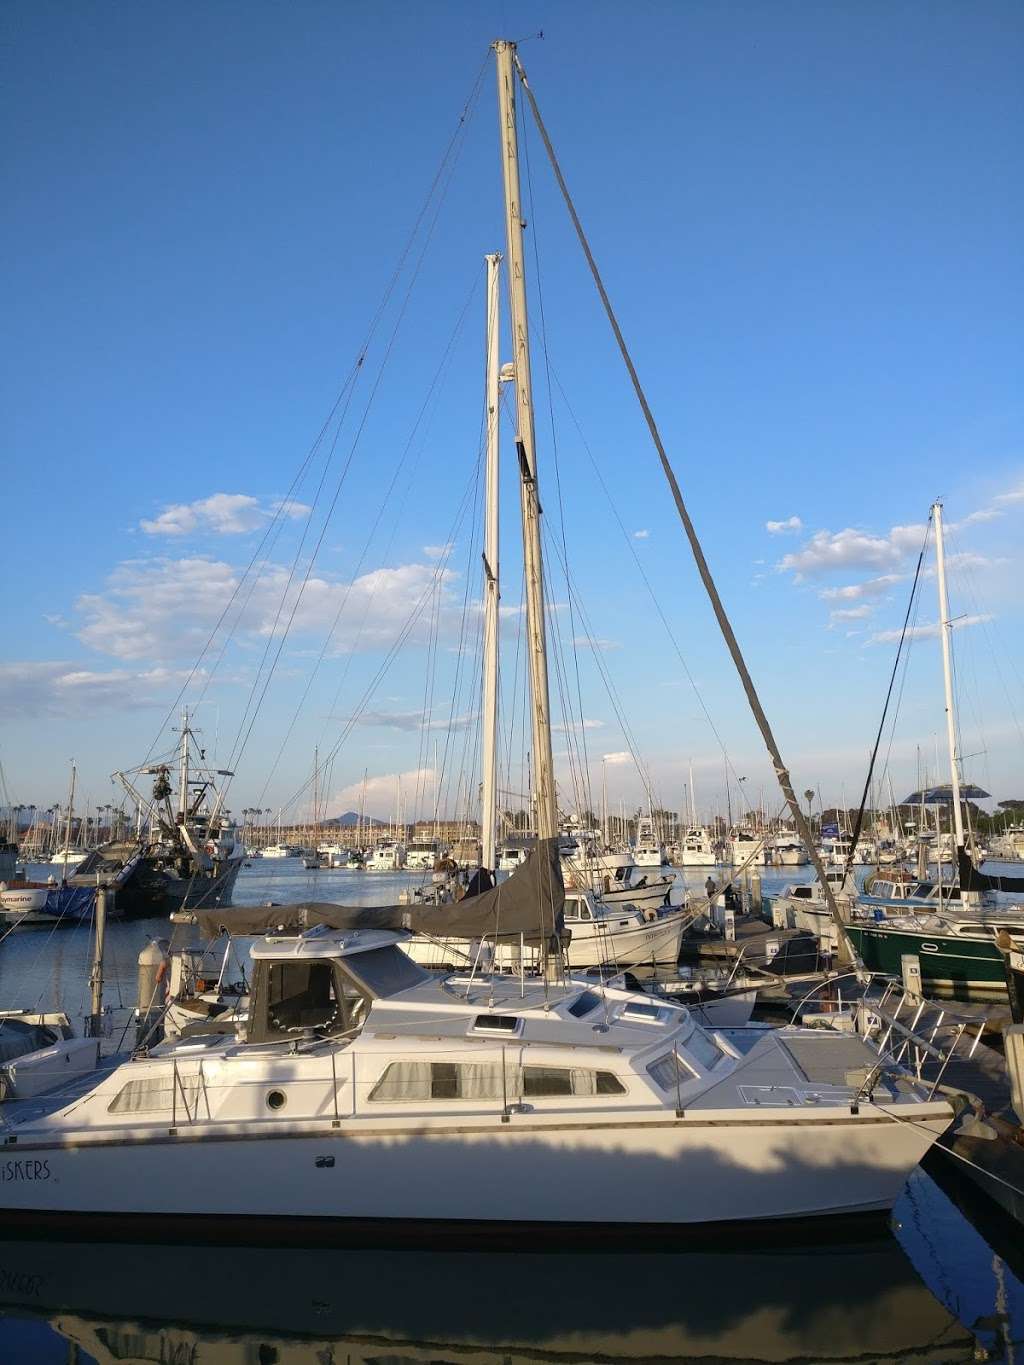 The Peace Boat Docked | Ventura Harbor, Ventura, CA 93001, Ventura, CA 93001, USA